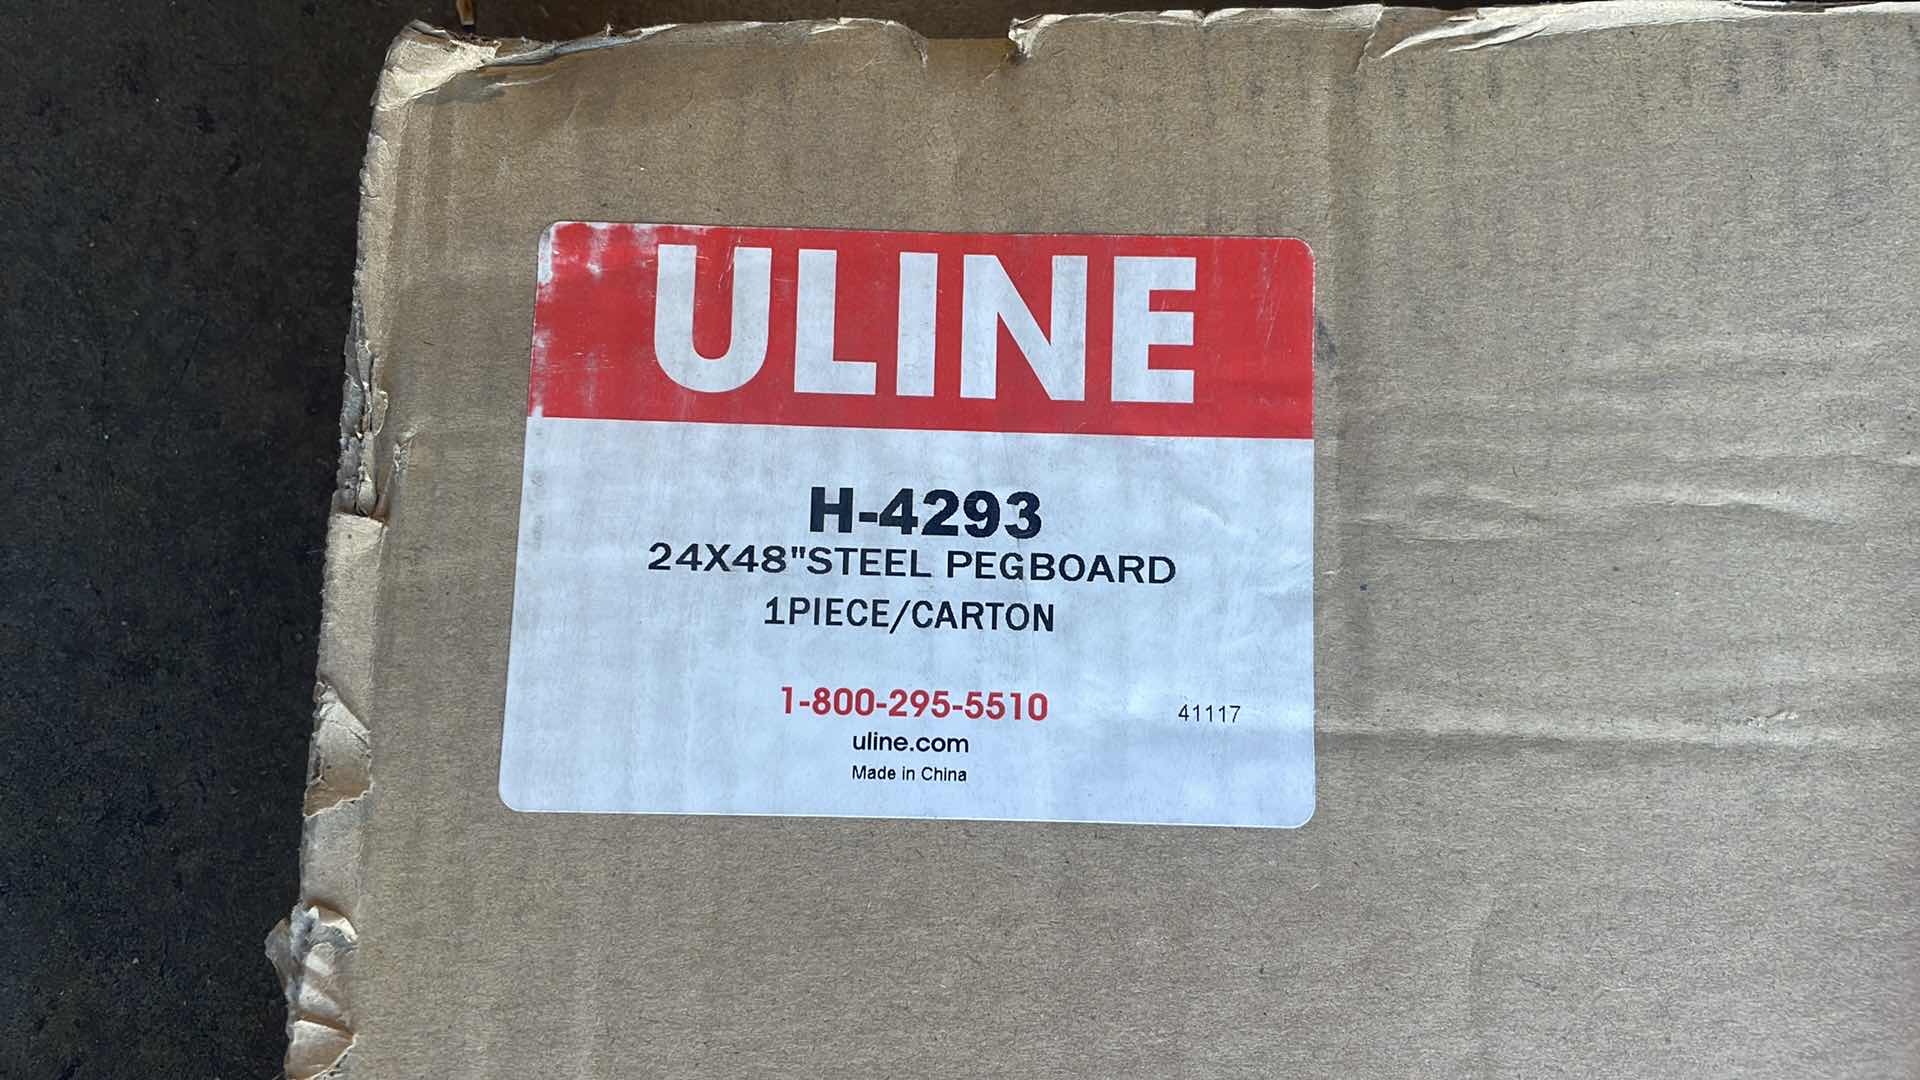 Photo 2 of ULINE H-4293 24”X48"STEEL PEGBOARD GRAY